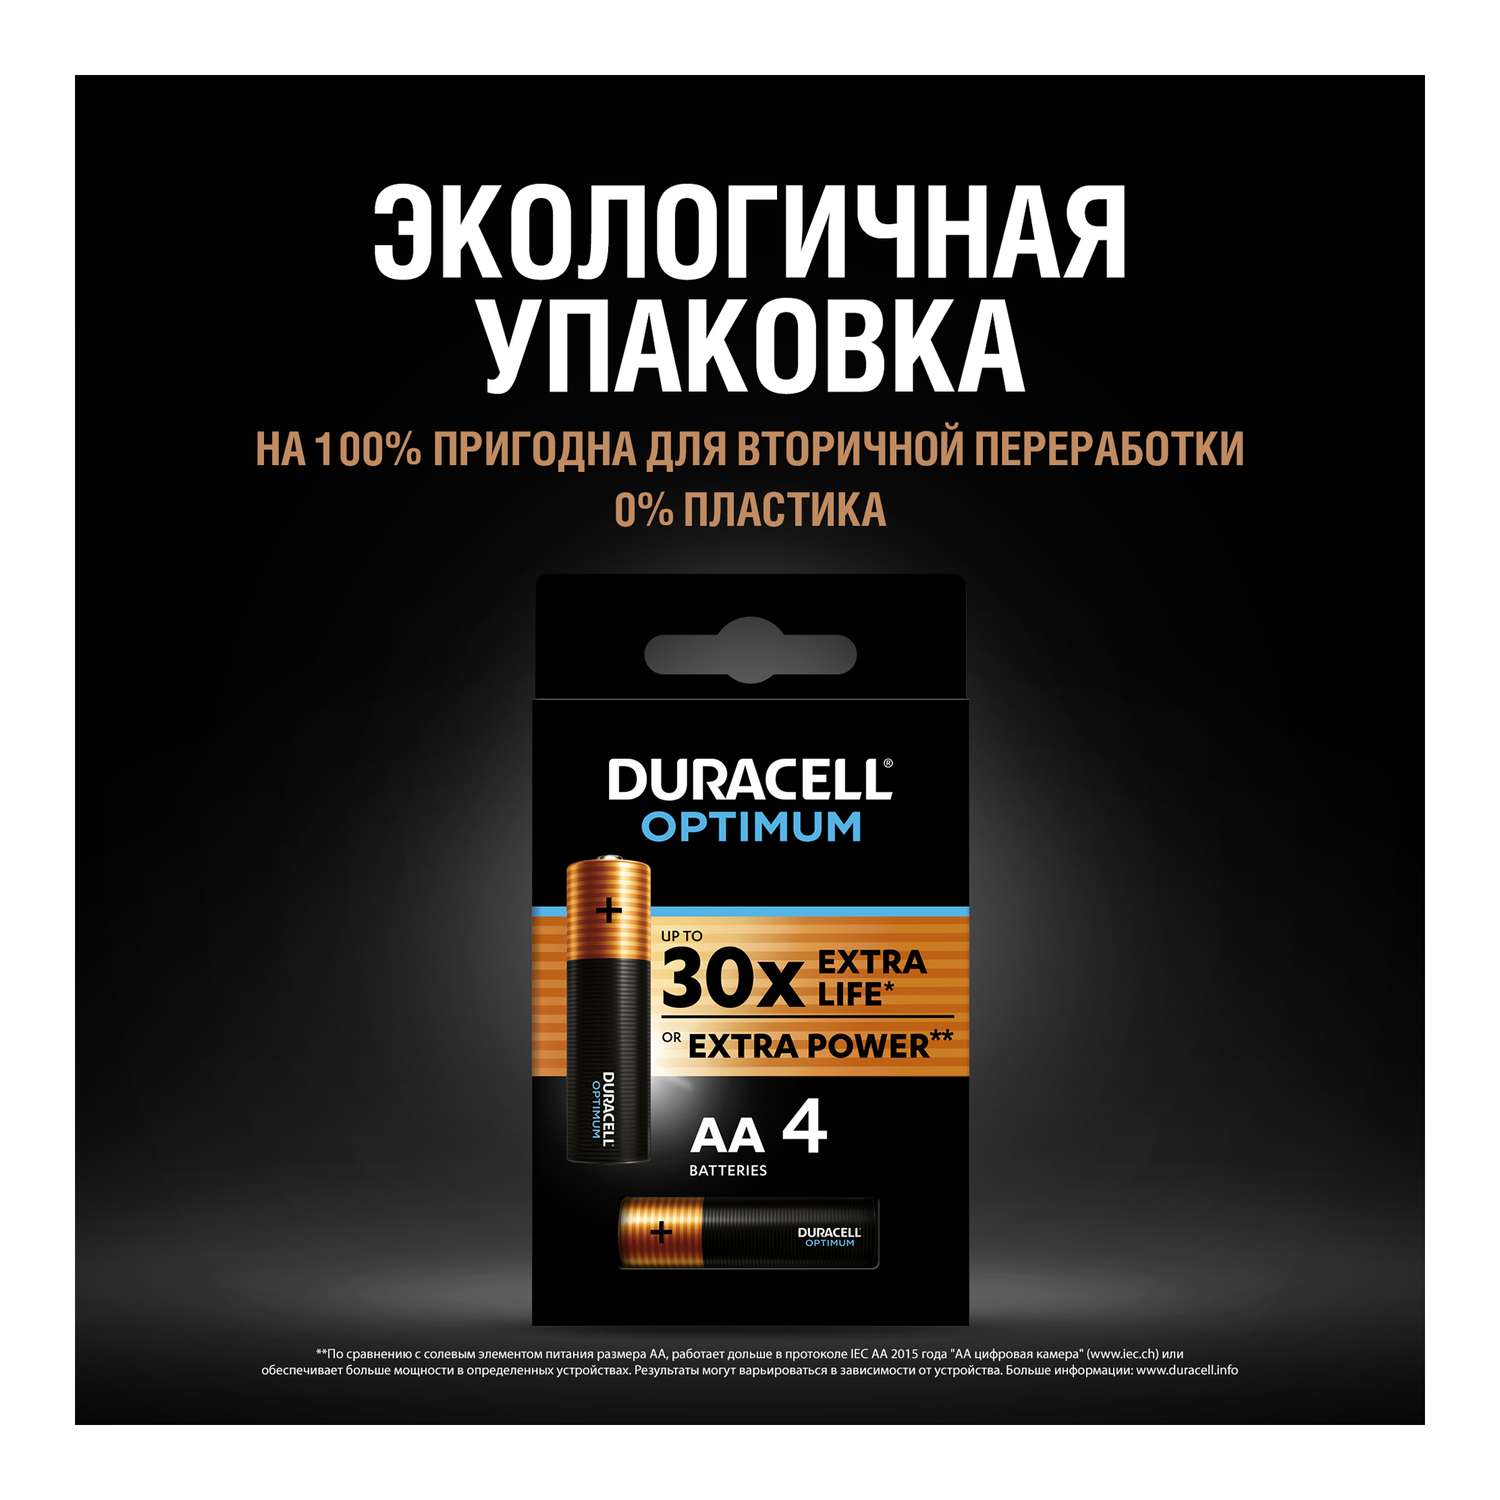 Батарейки Duracell Optimum AA 4шт 5014061 - фото 4